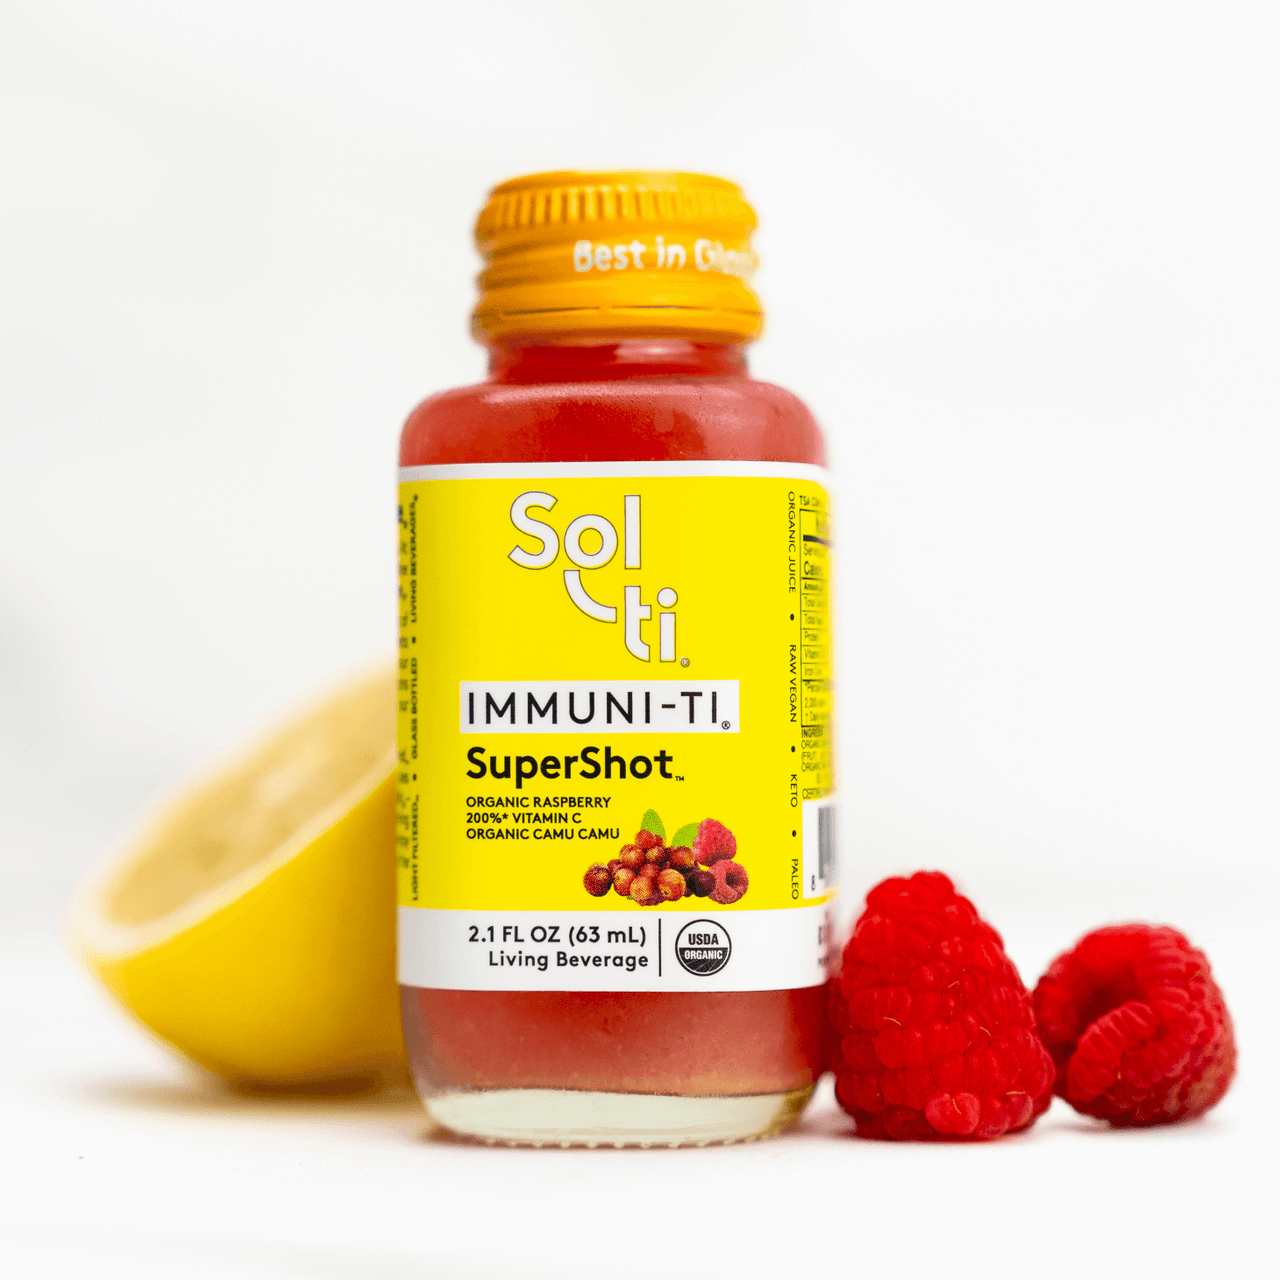 a IMMUNI-TI SuperShot bottle next to raspberries and a lemon slice